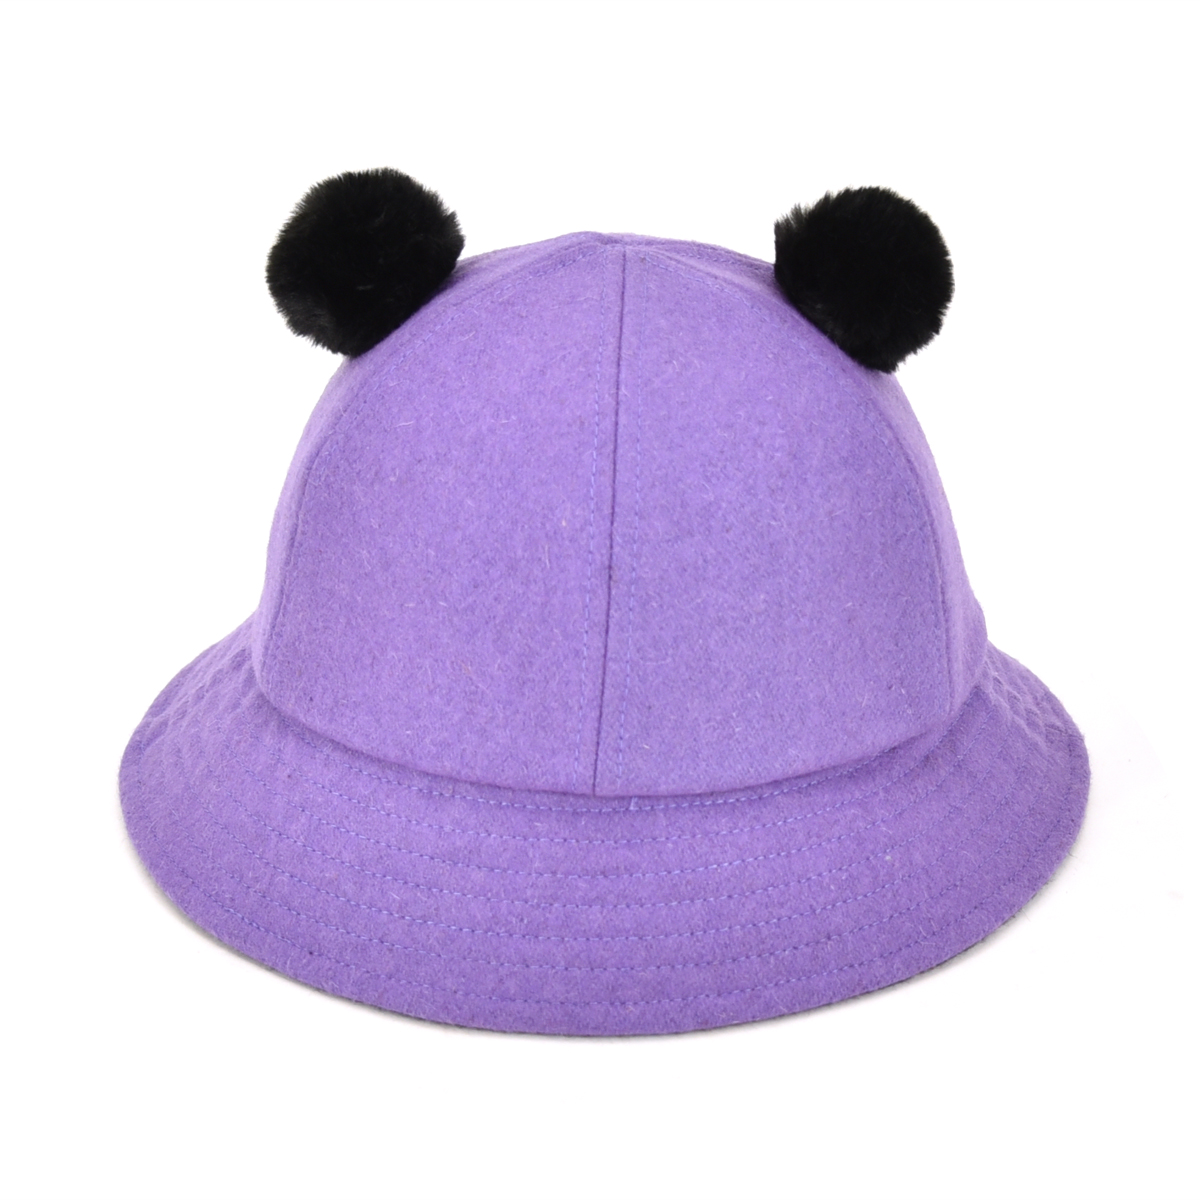 warm winter hat, melon wool hat, outdoor hat